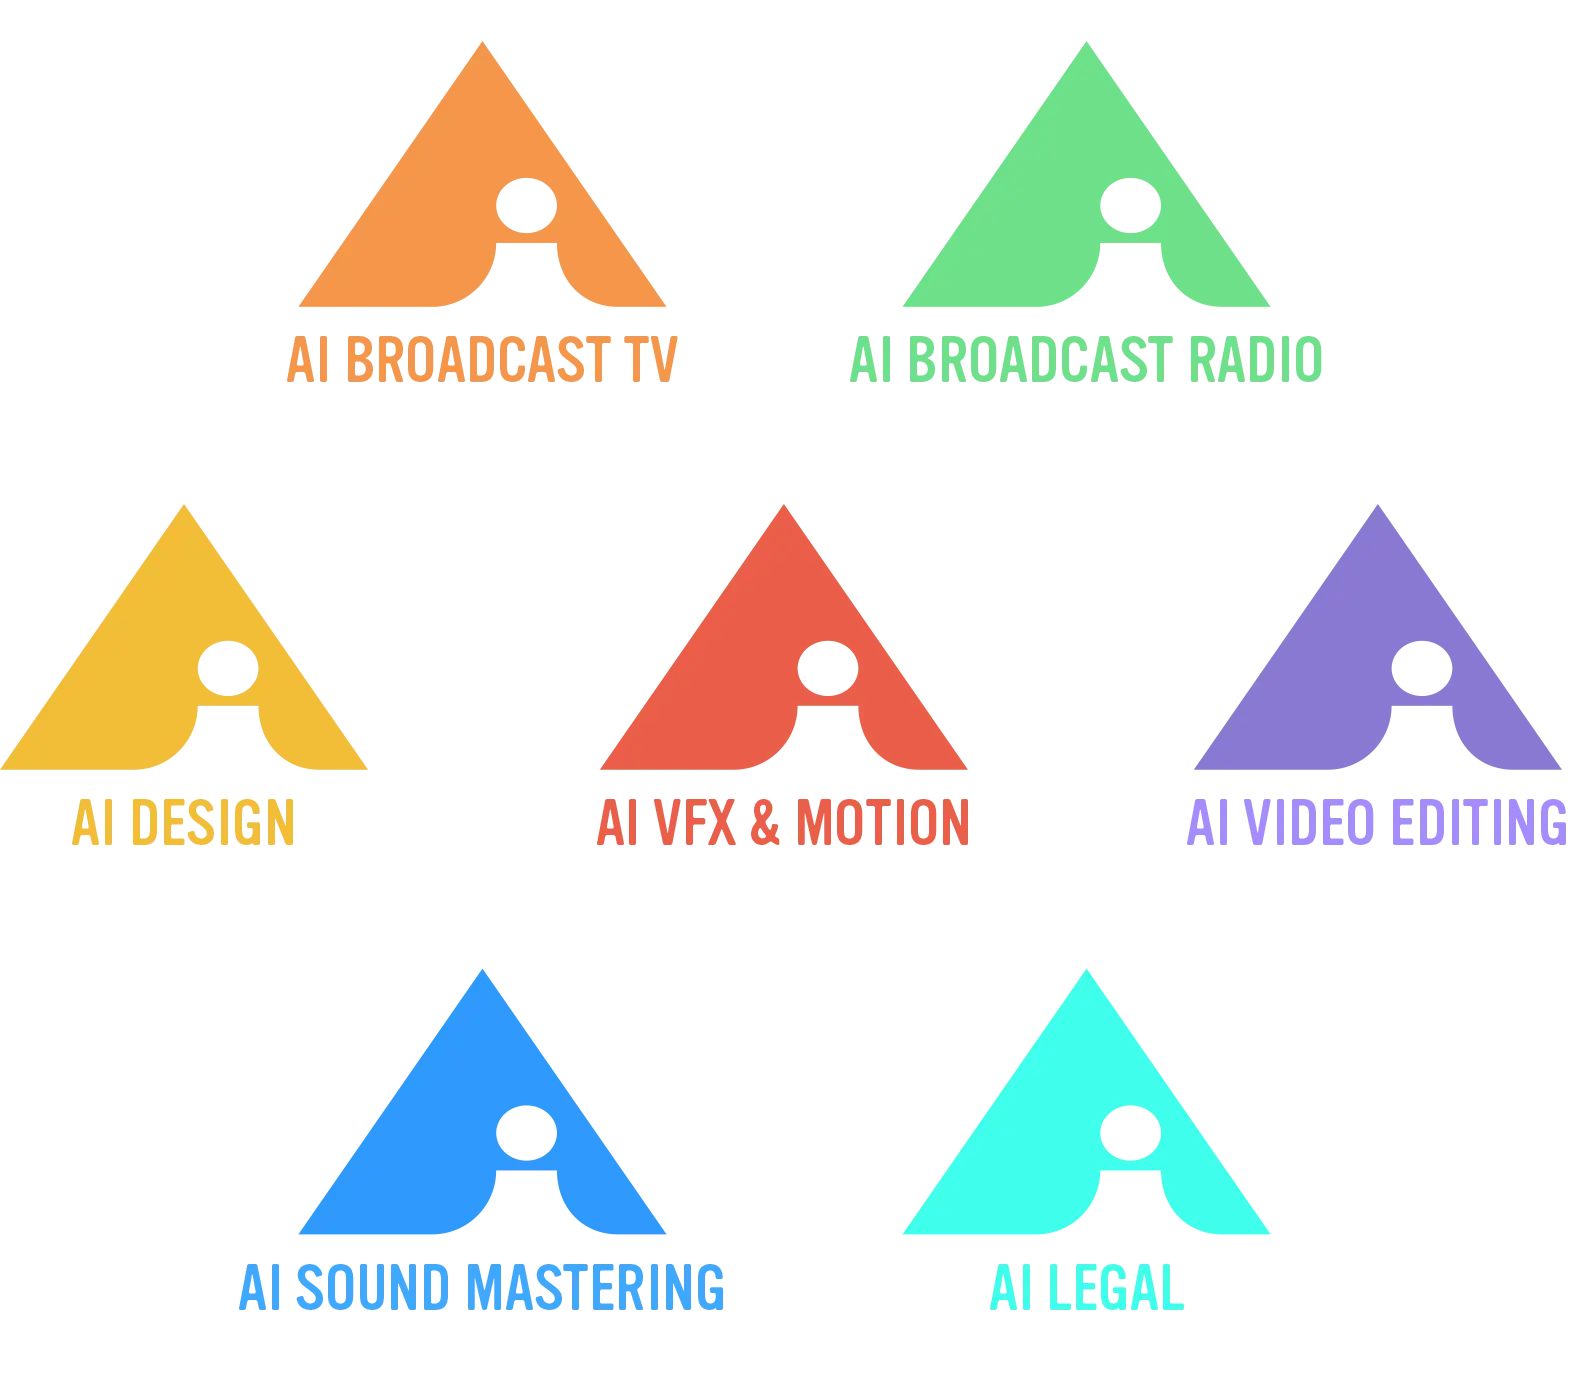 Certified badges